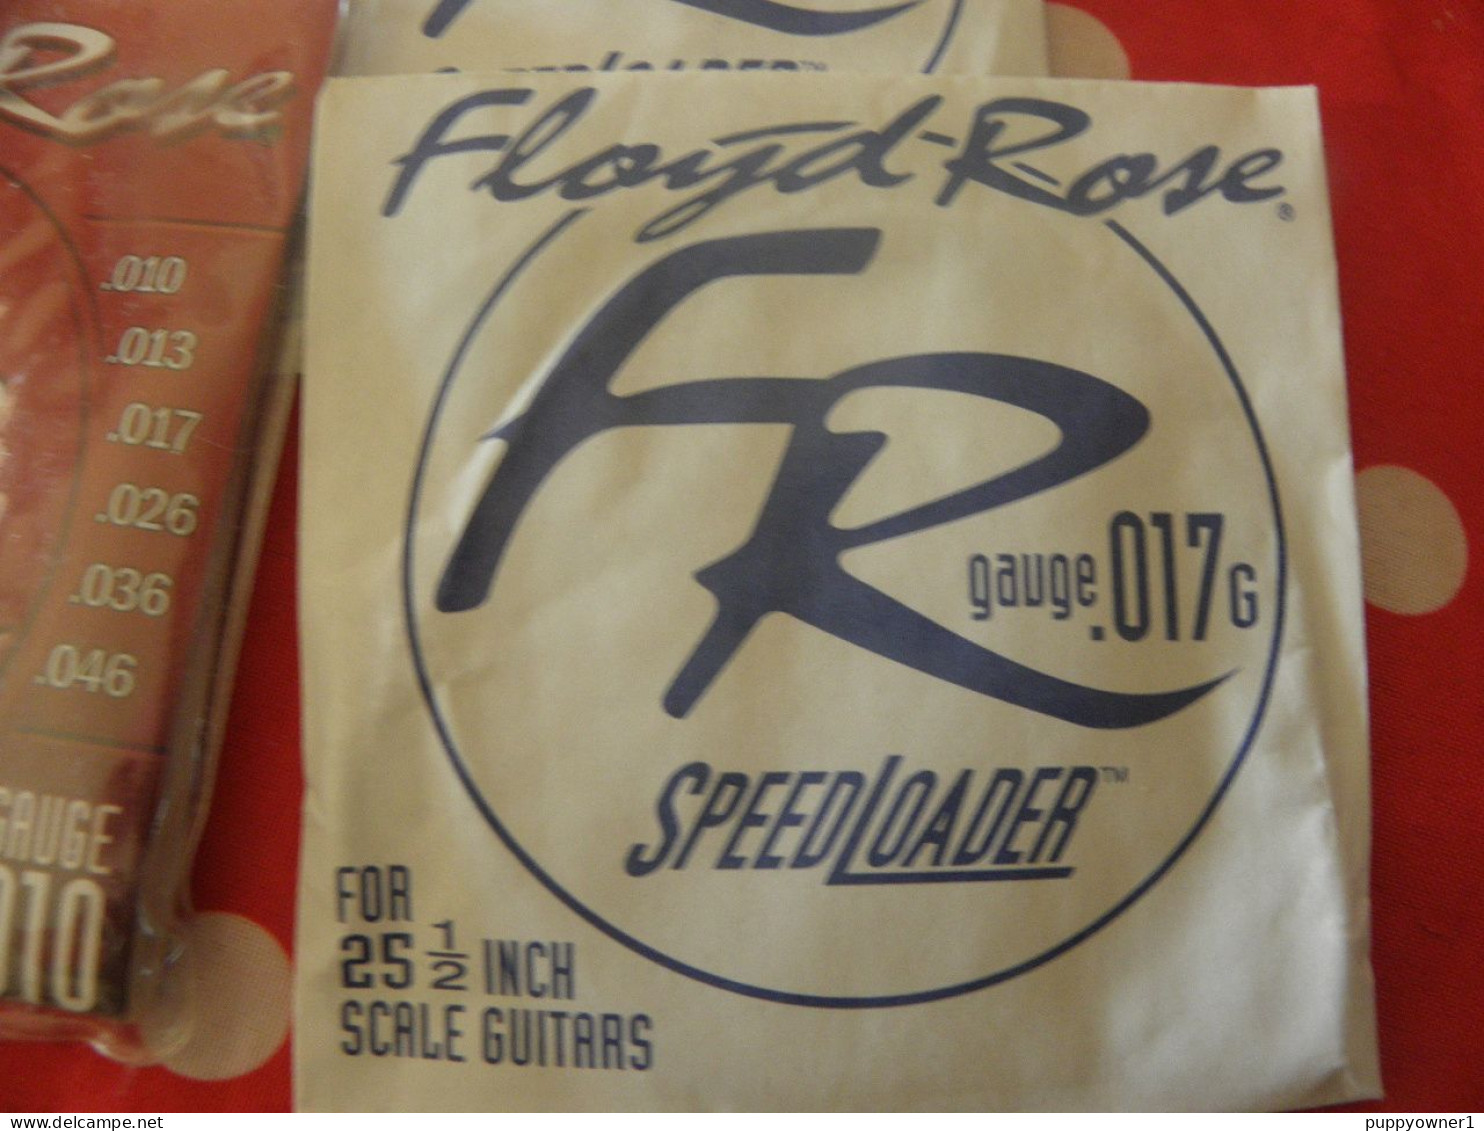 Rare 3 Floyd Rose Speedloader Pour 25.5 Inch Scale Guitar Corde De Guitare 0.017g - Musical Instruments